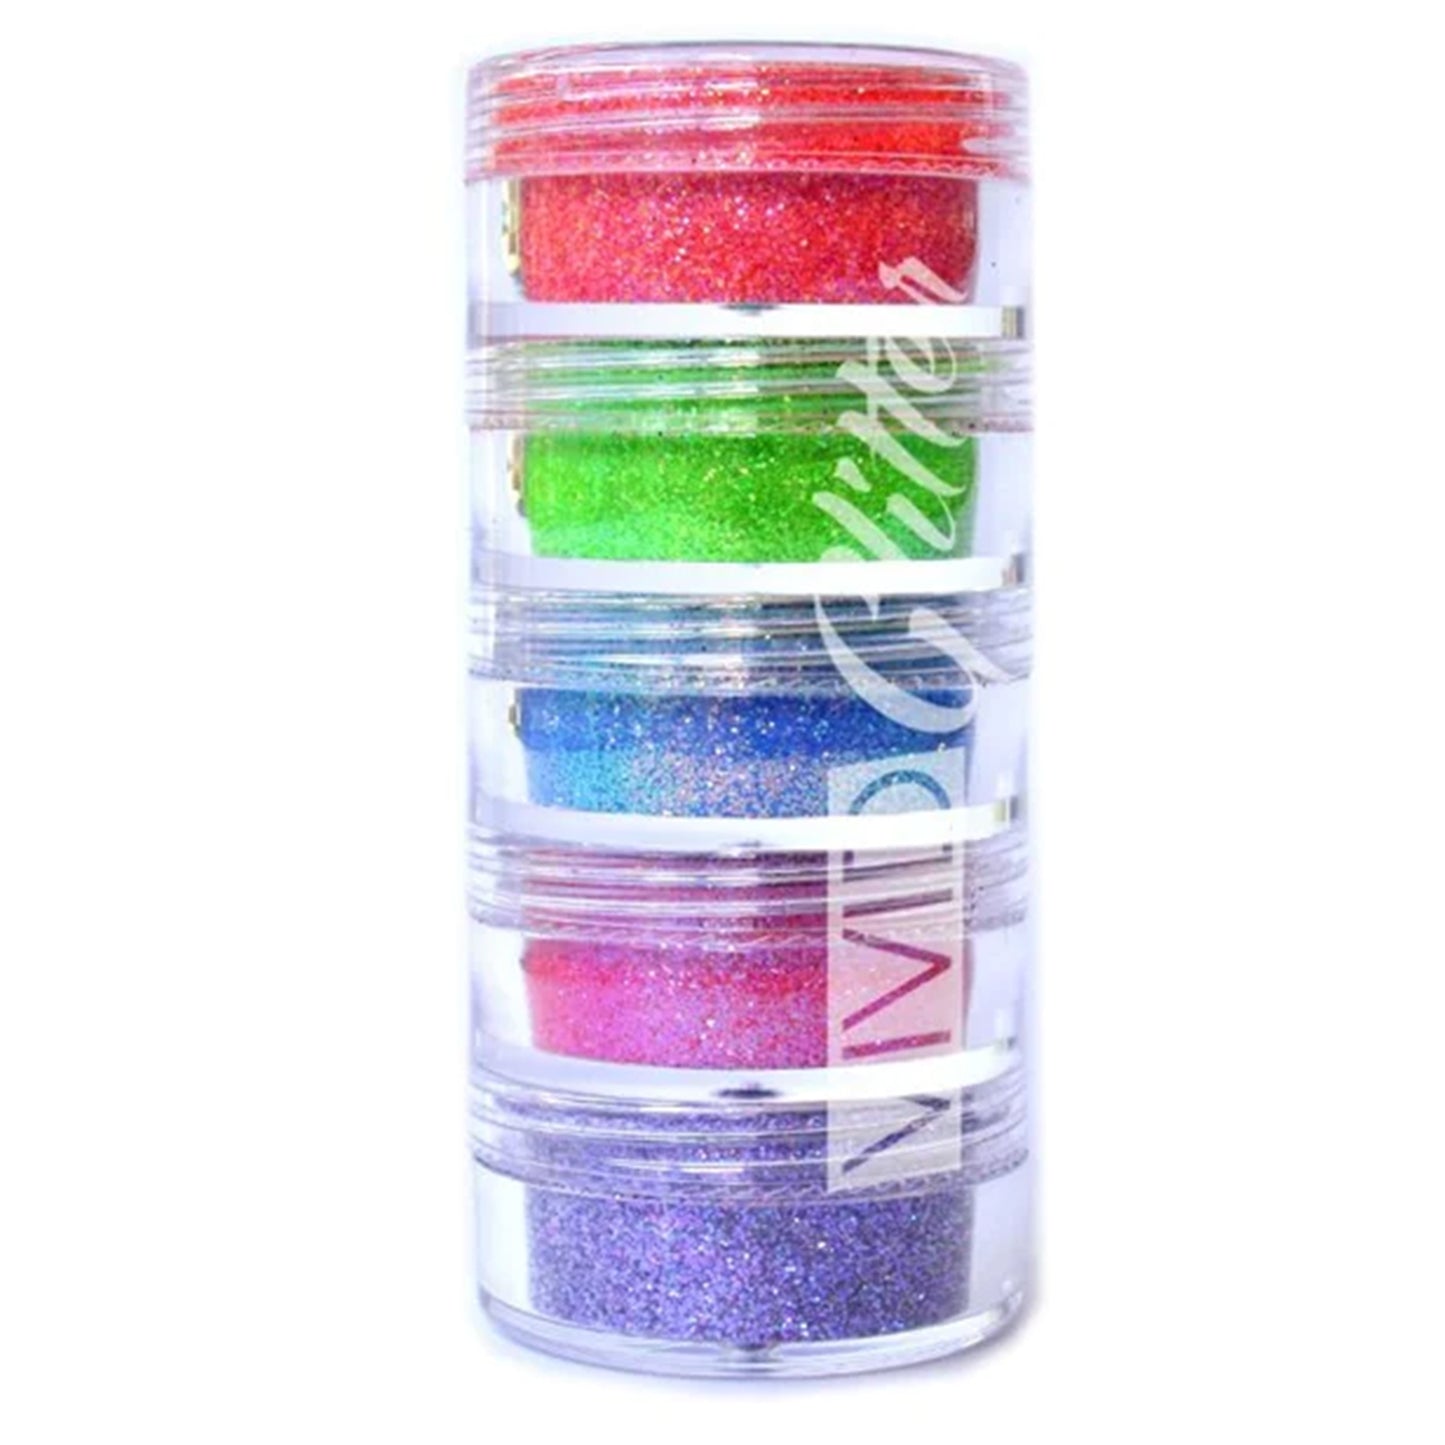 VIVID Glitter Loose Chunky Glitter 5 Piece Stack - Twister Rainbow